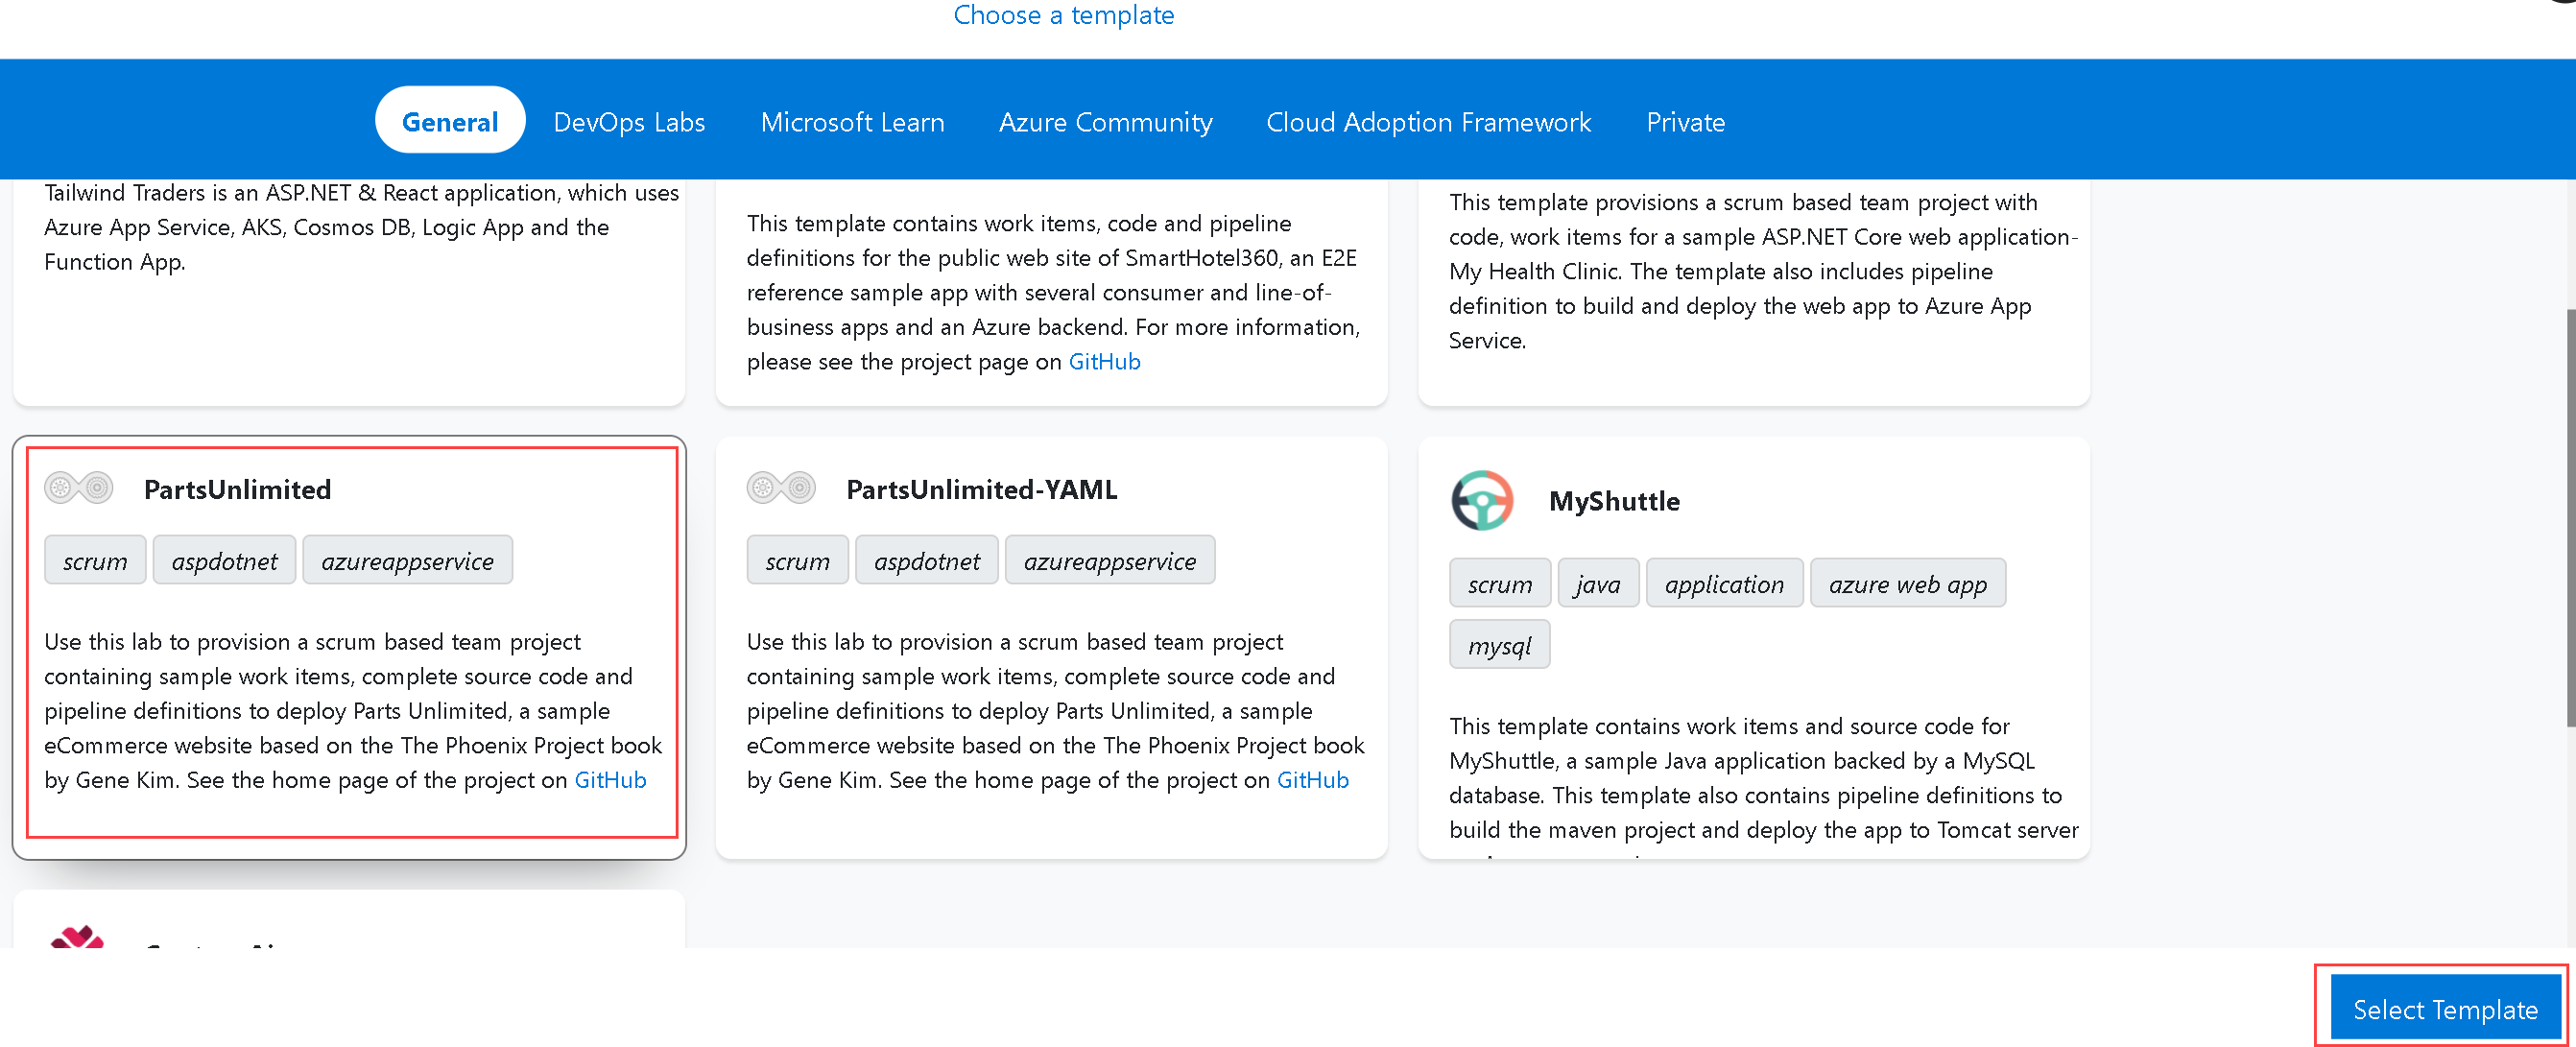 Azure DevOps Generator website. On the choose template window, select
"PartsUnlimited"